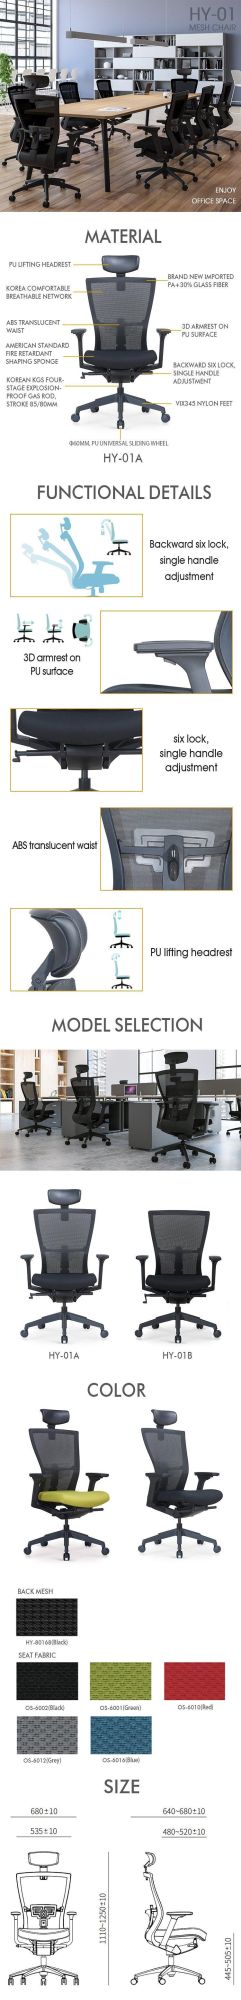 Ergonomic Office Korean Design Conference Room Swivel Chair